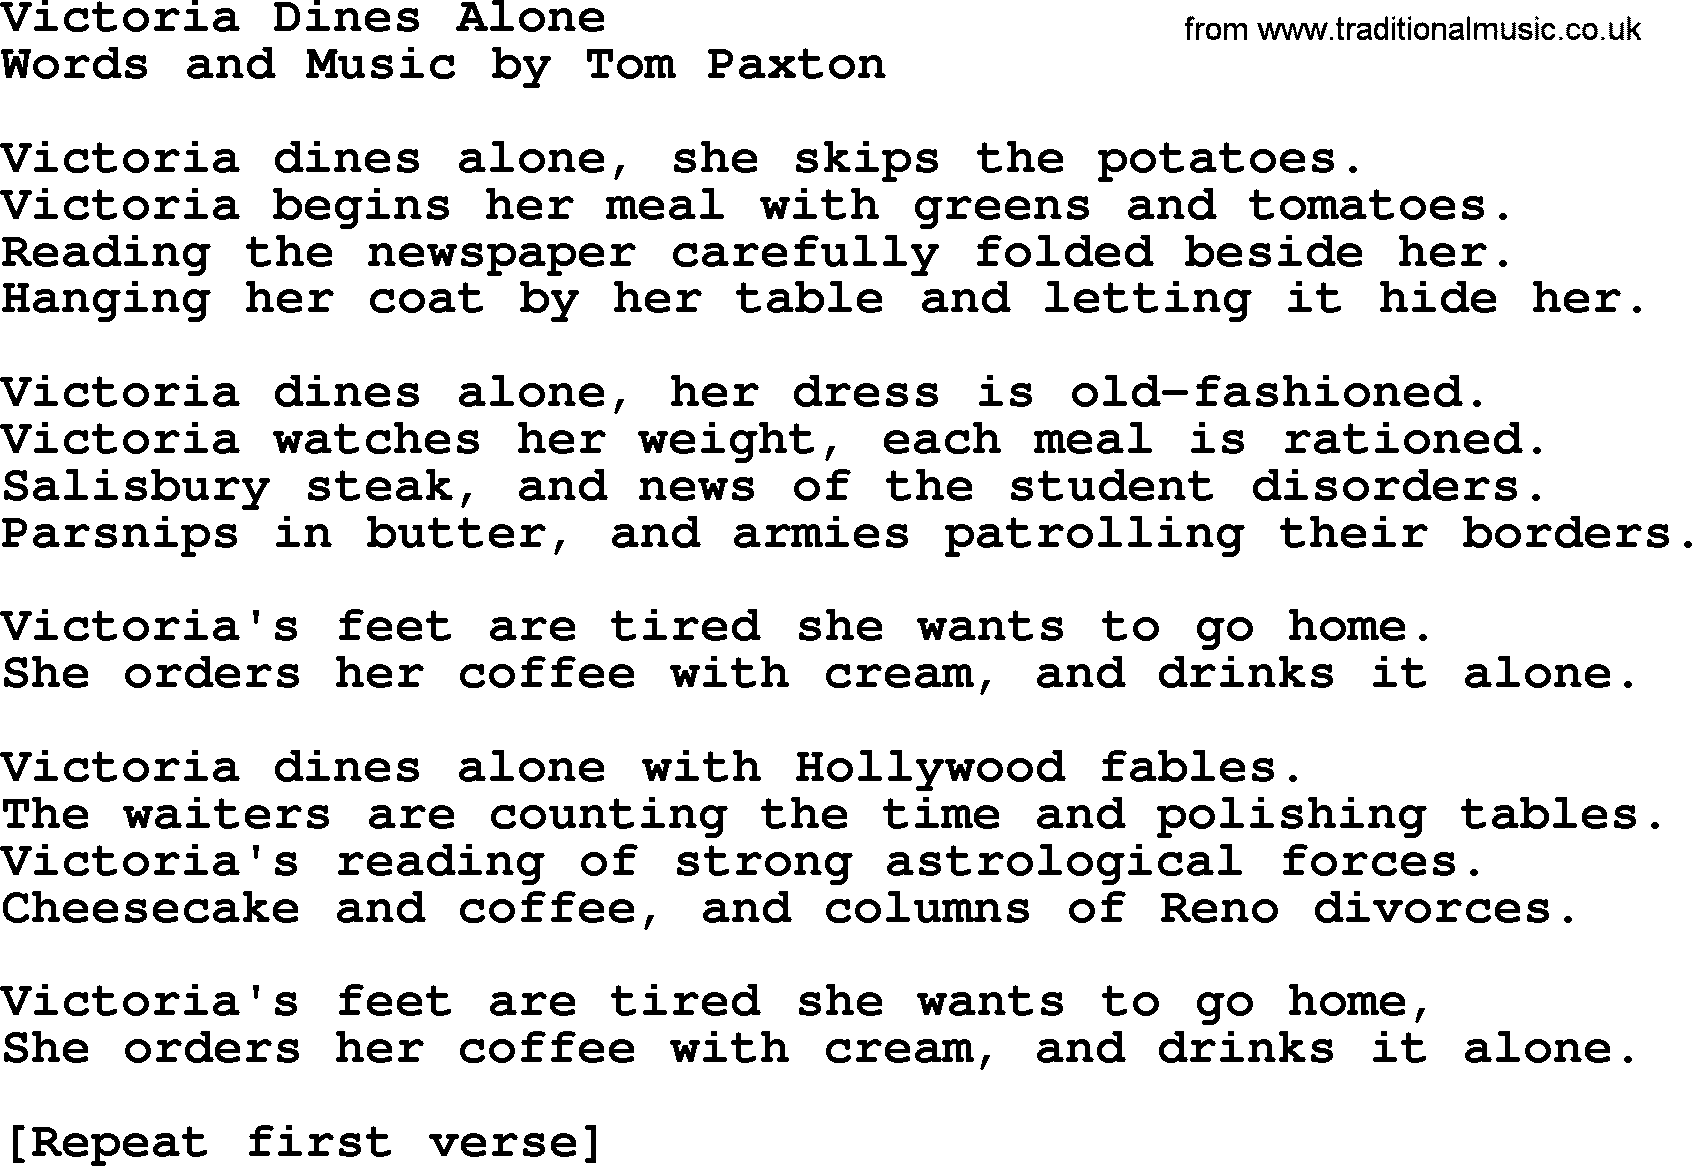 Tom Paxton song: Victoria Dines Alone, lyrics